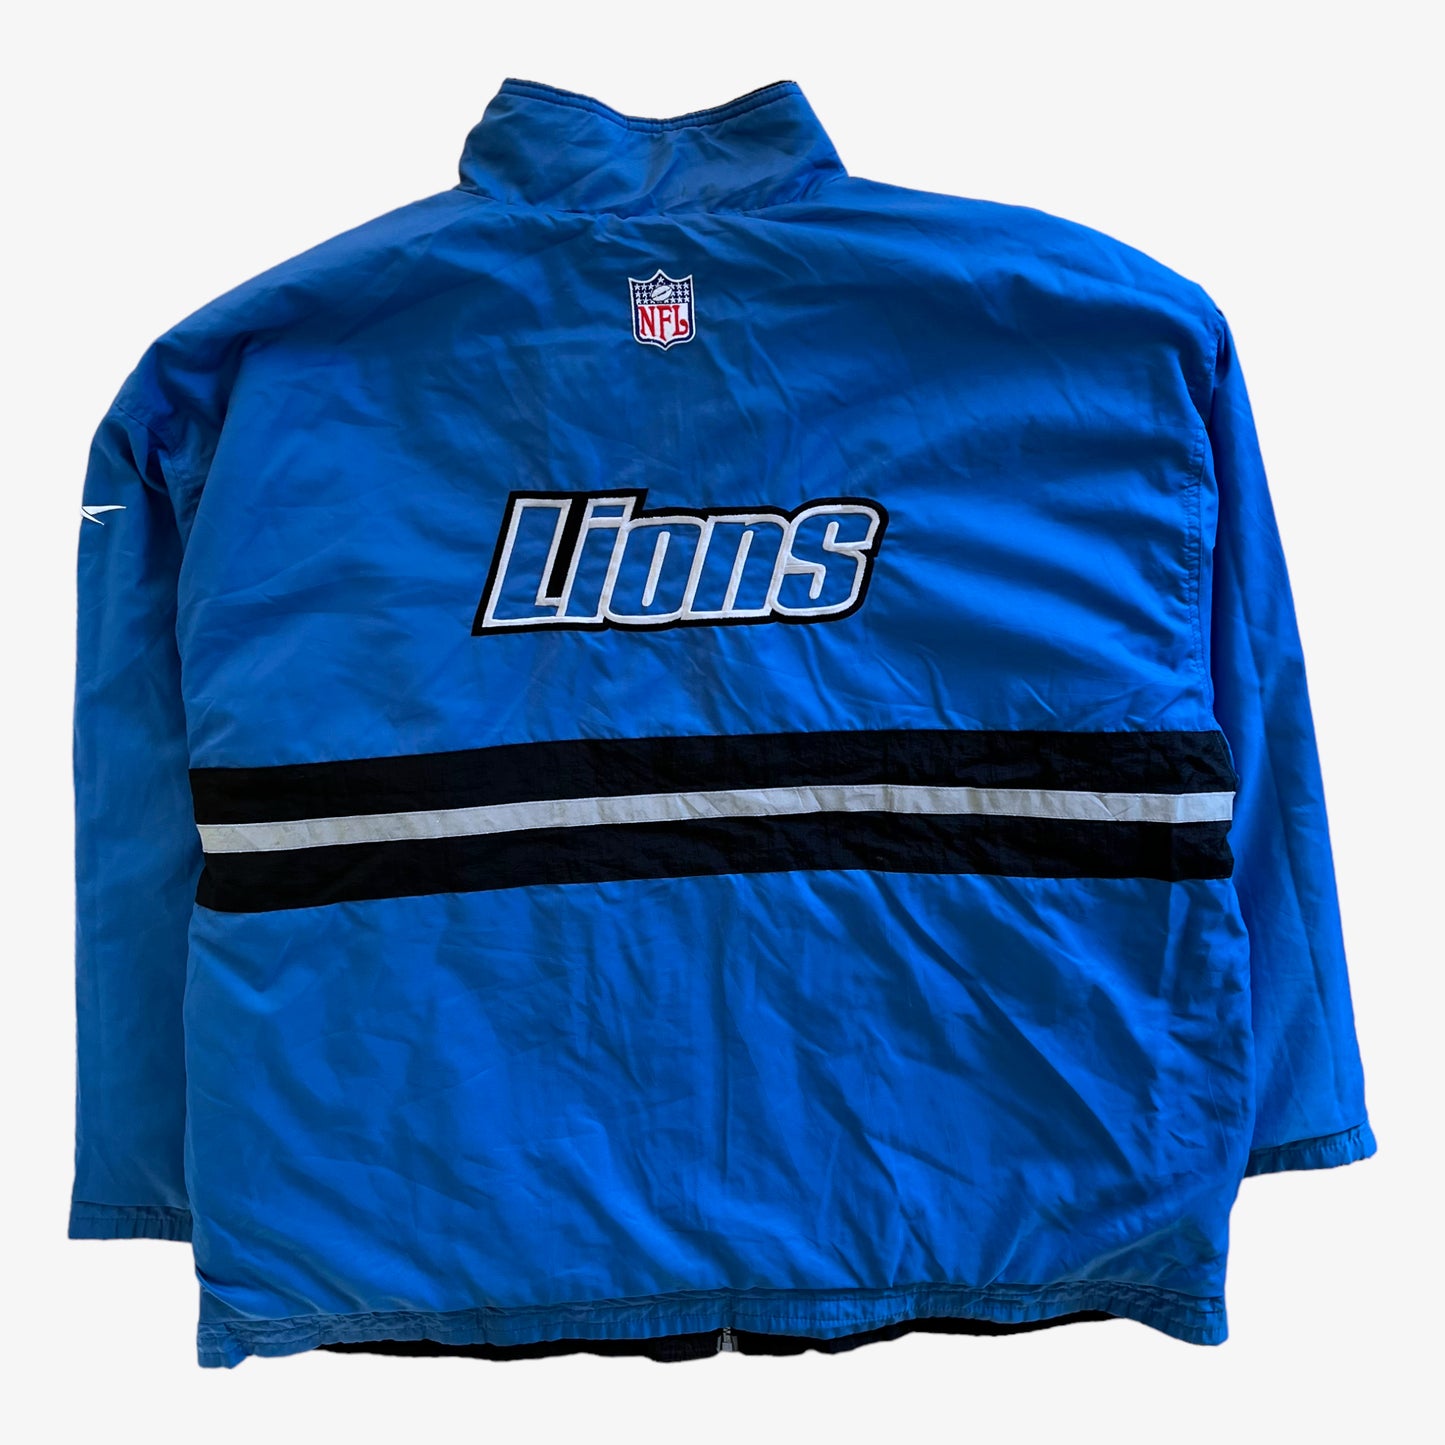 Vintage 90s Reebok NFL Pro Line Detroit Lions Reversible Jacket With Back Spell Out Reversed Back - Casspios Dream